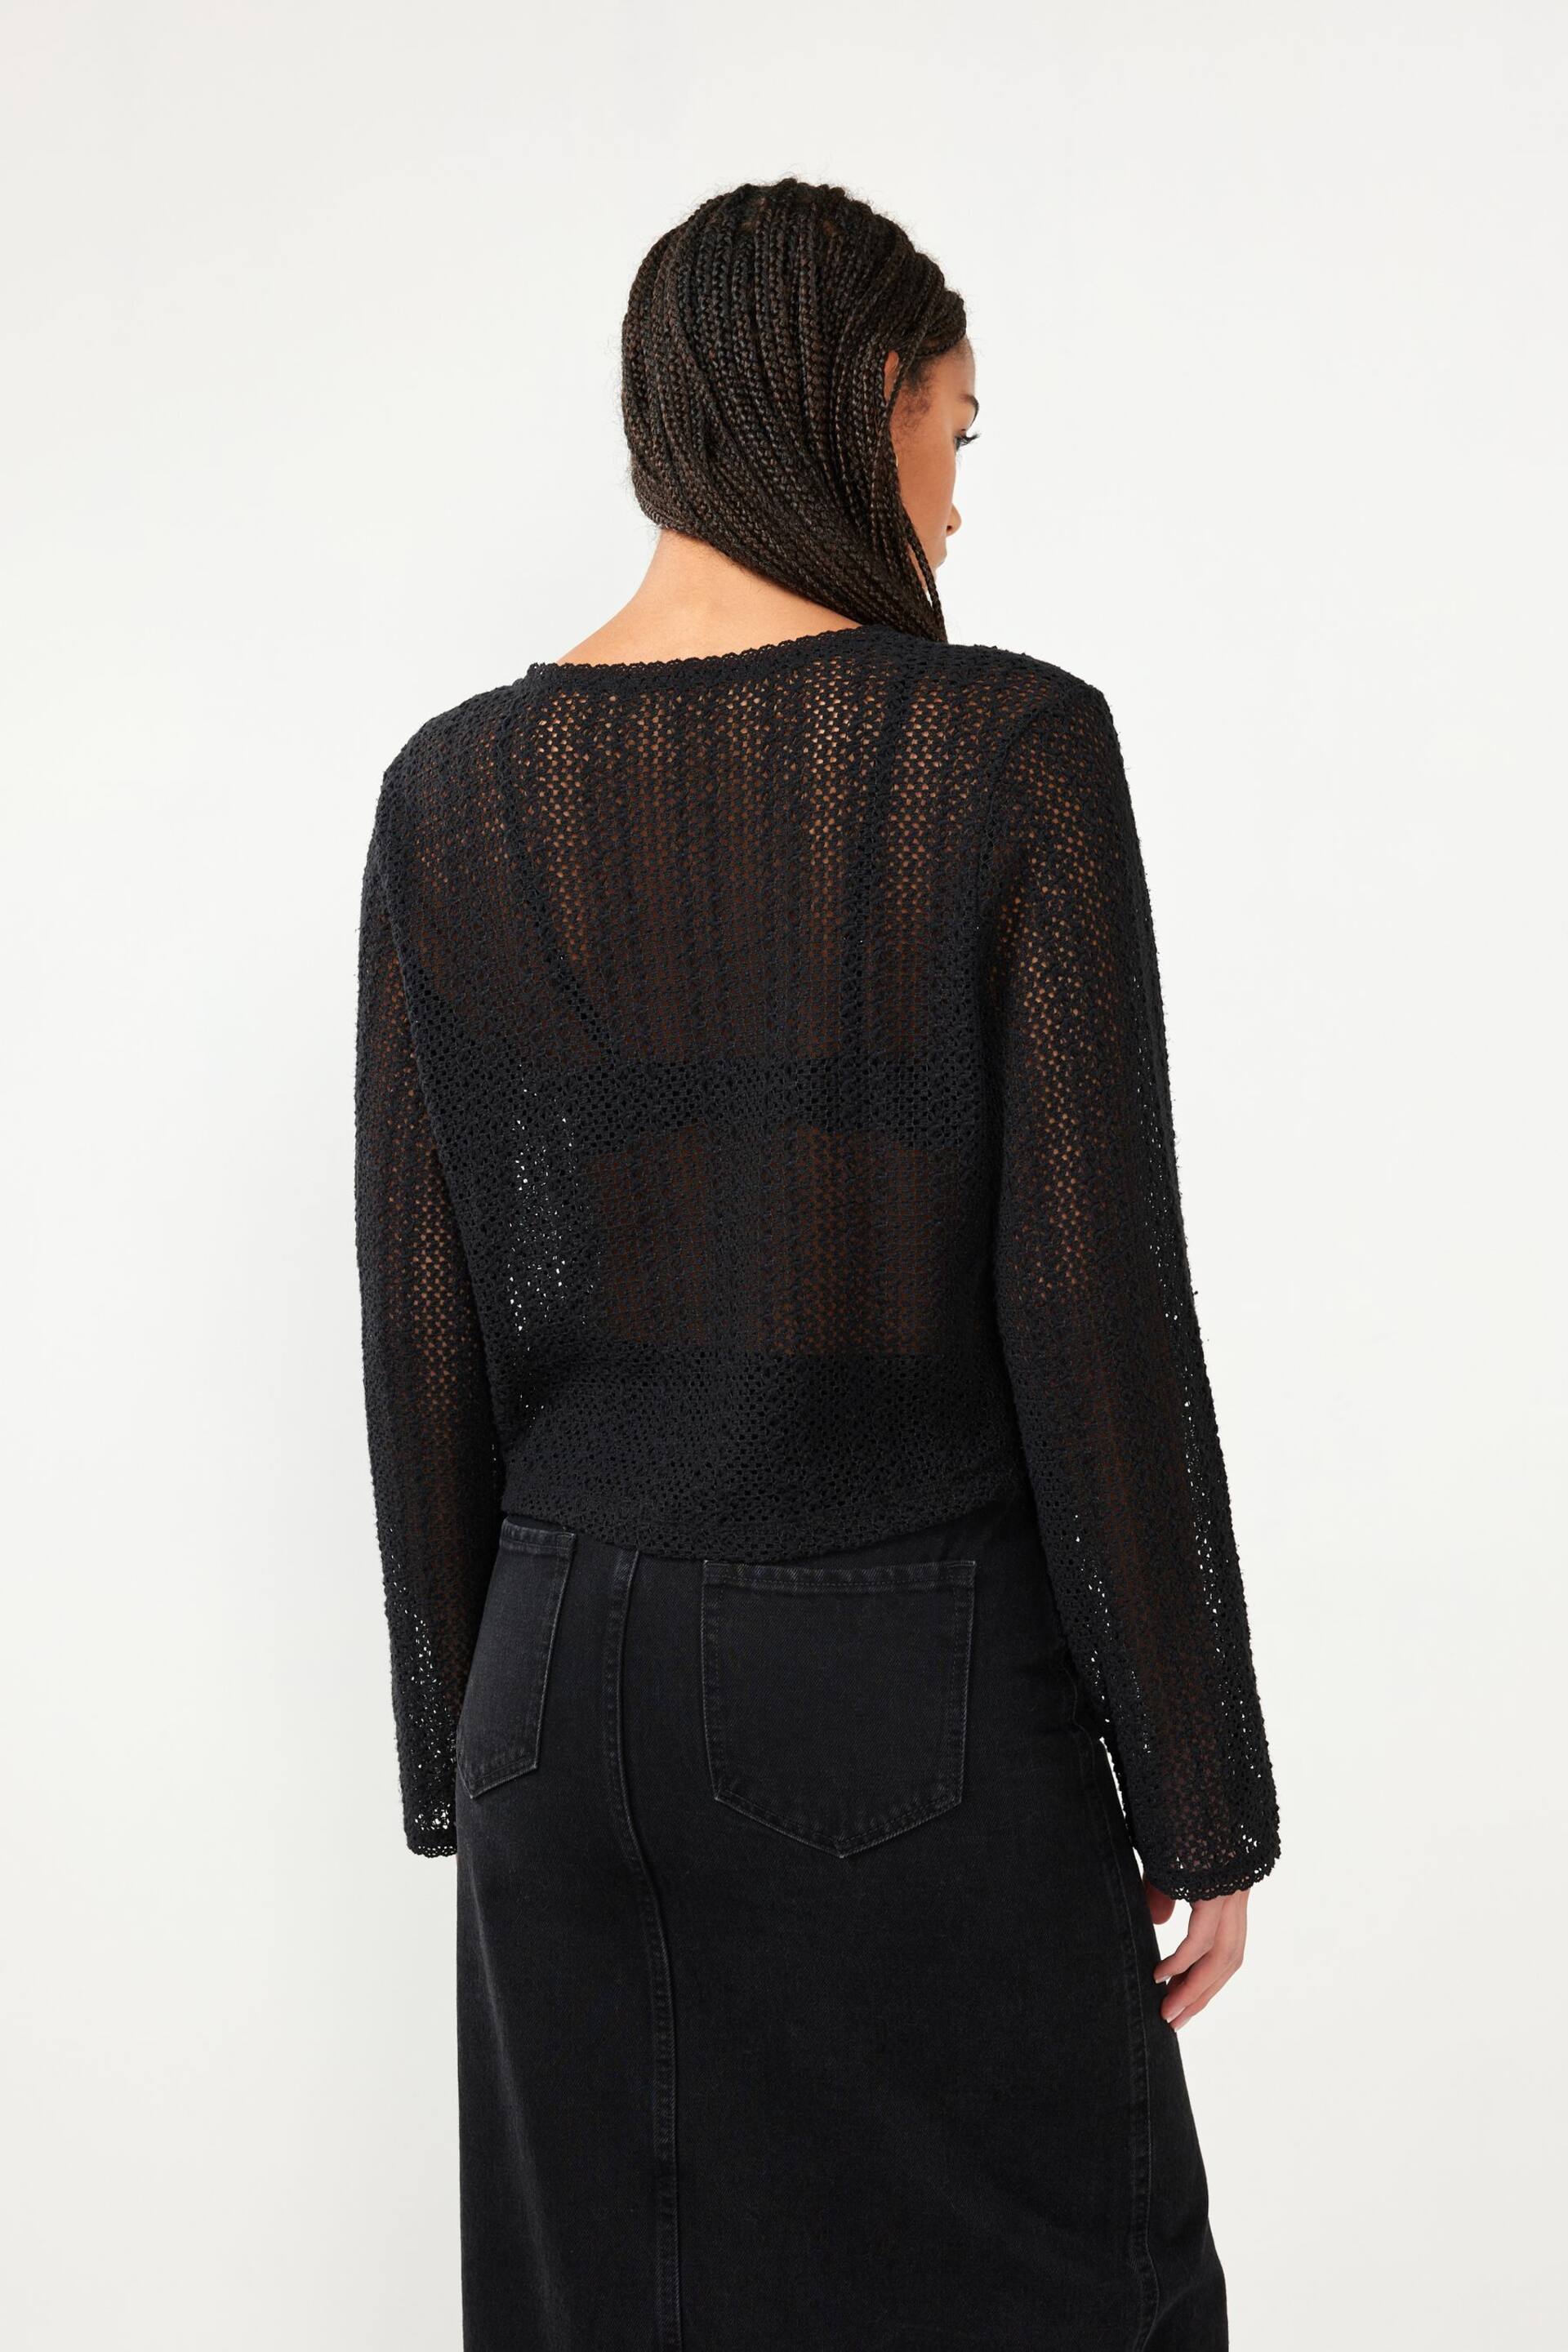 Black Crochet Knit Tie Detail Textured Cardigan - Image 2 of 6